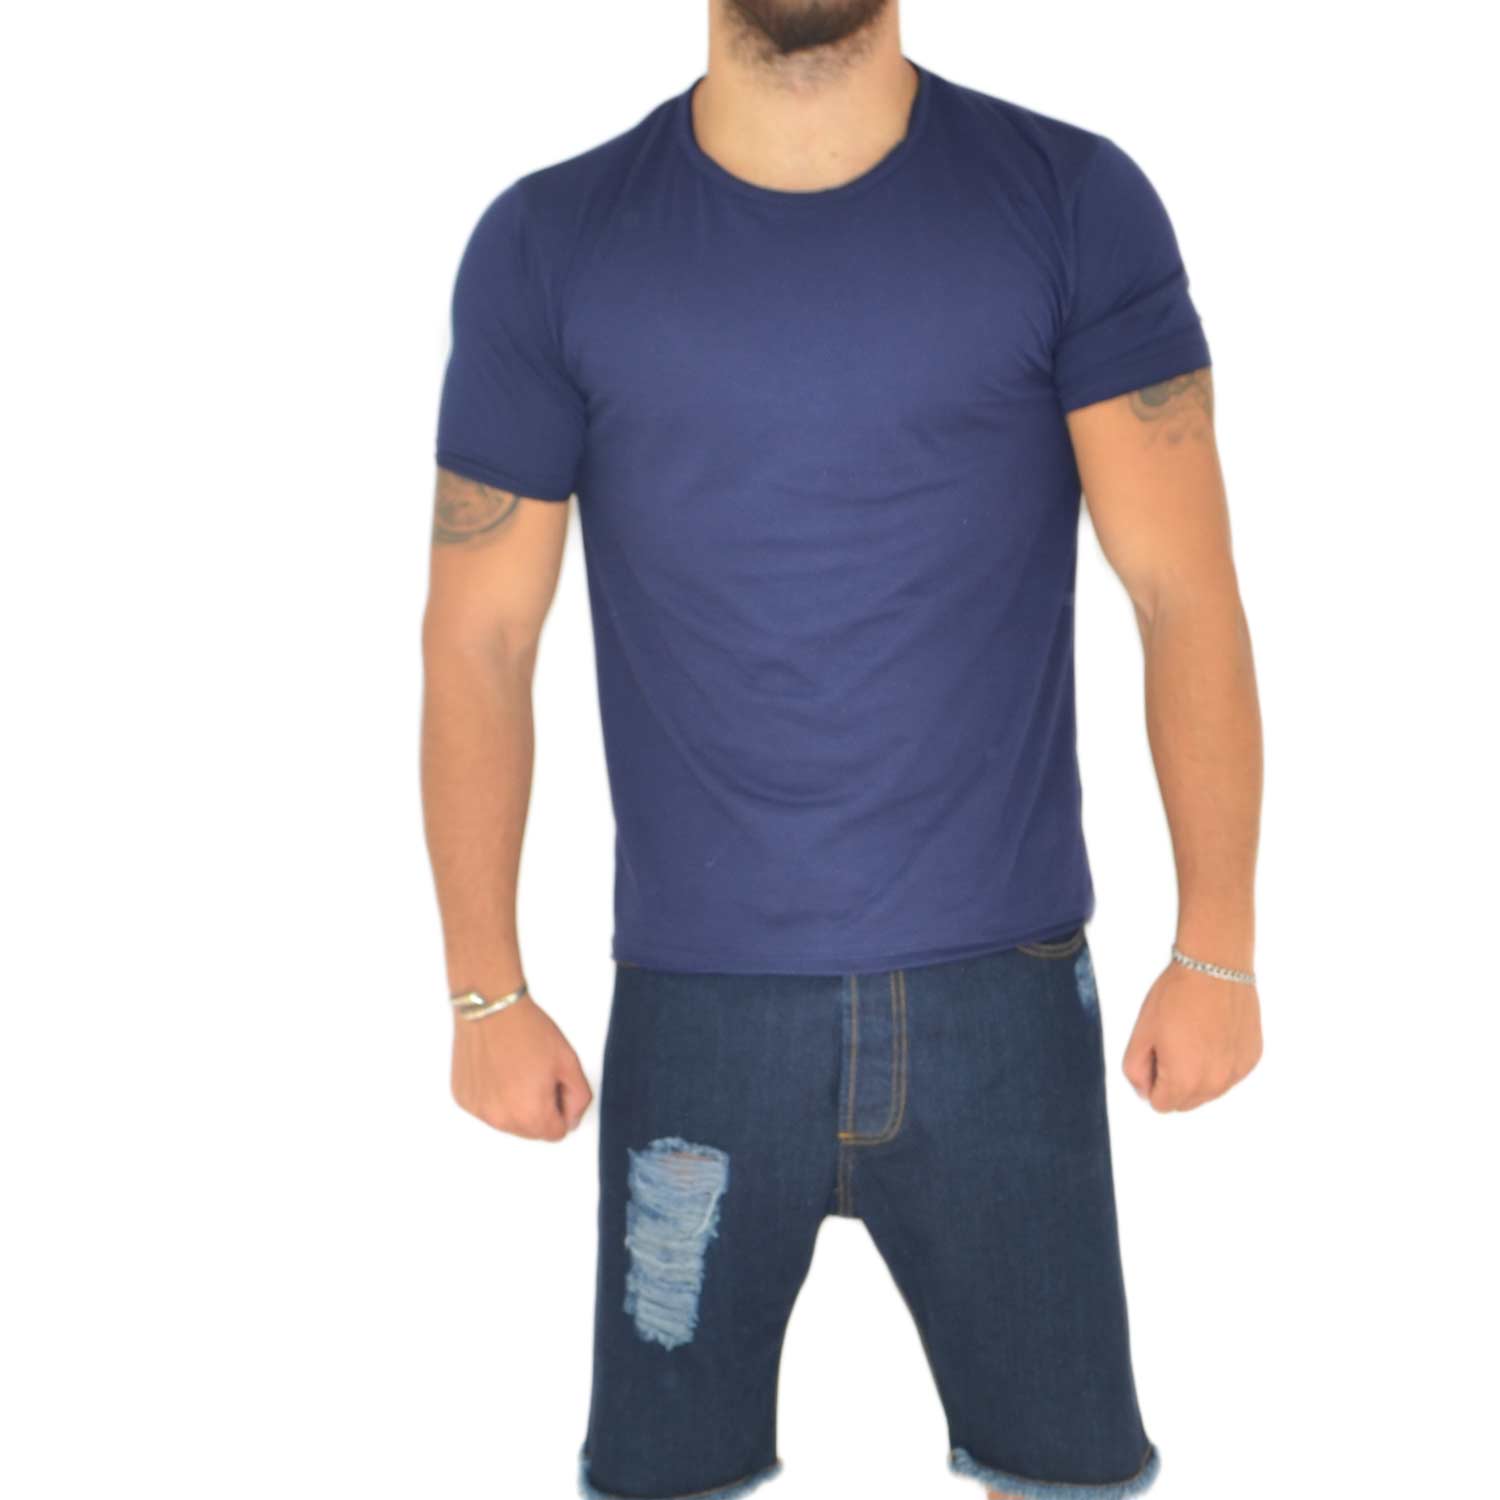 T- shirt basic uomo in cotone elastico blu avion slim fit girocollo con cucitura in tinta made in italy.